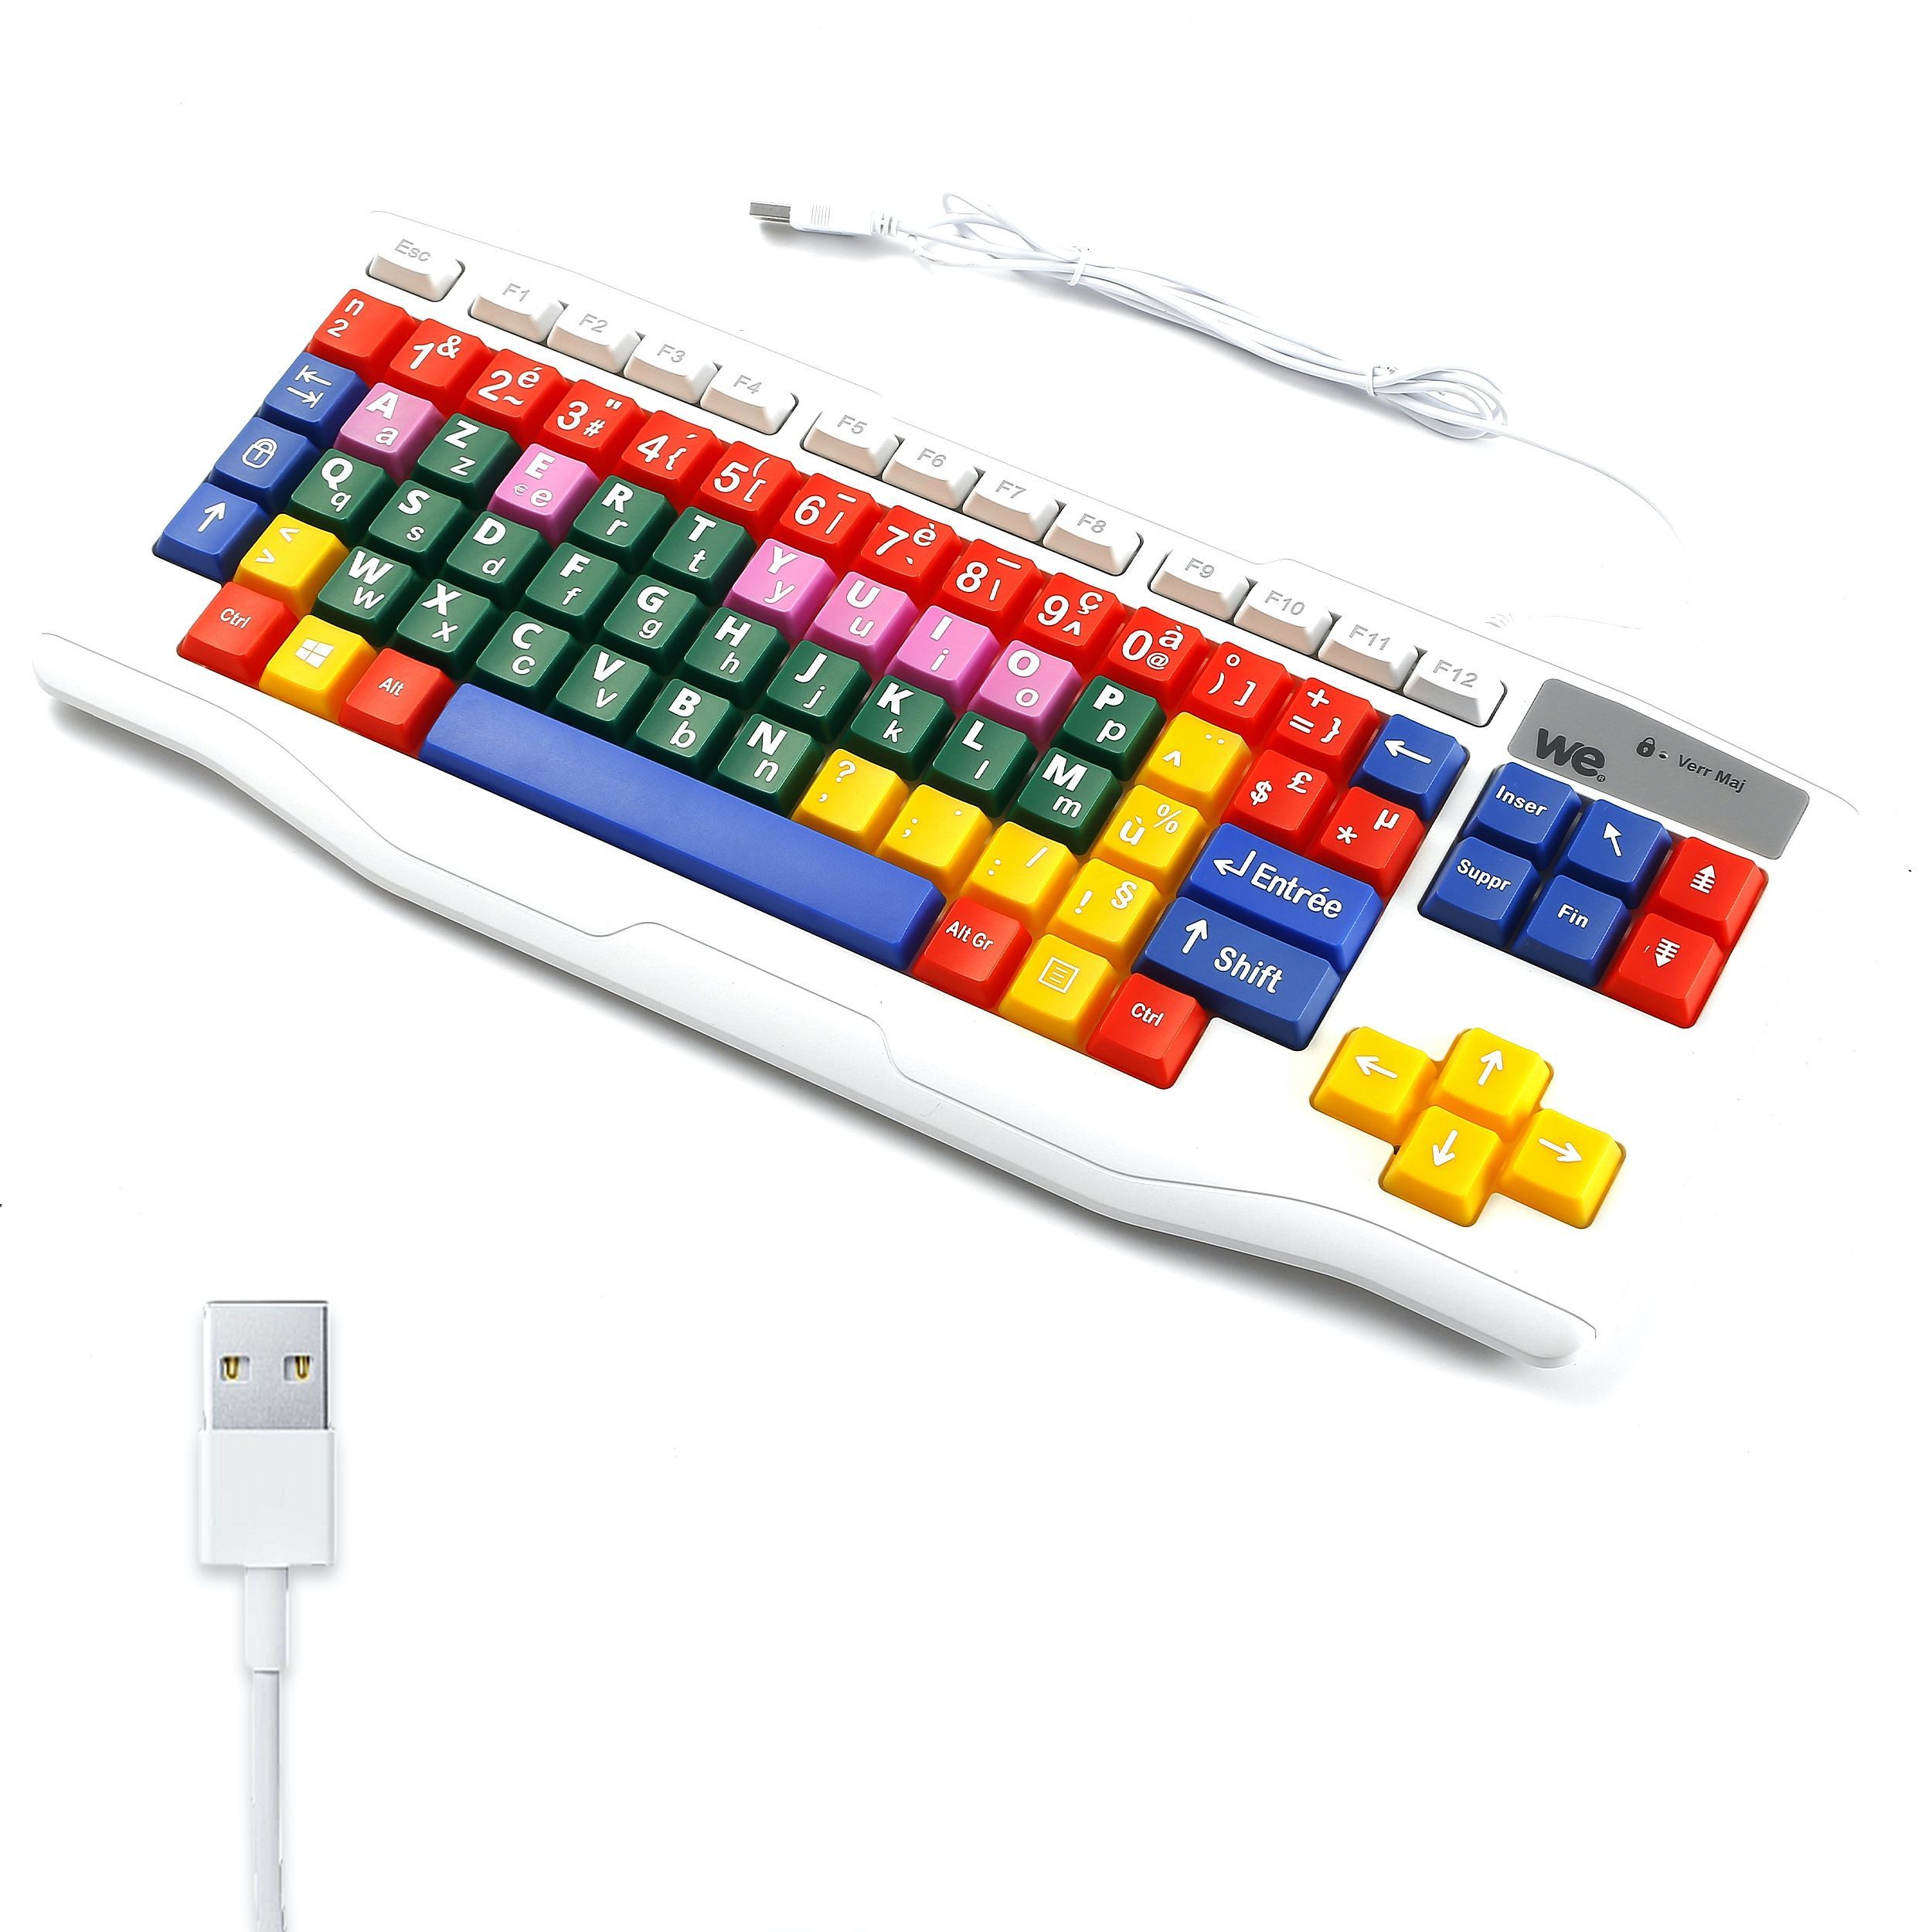 Clavier Microsoft Ergonomic Keyboard, azerty - LXM-00005 - CARON  Informatique - Calais